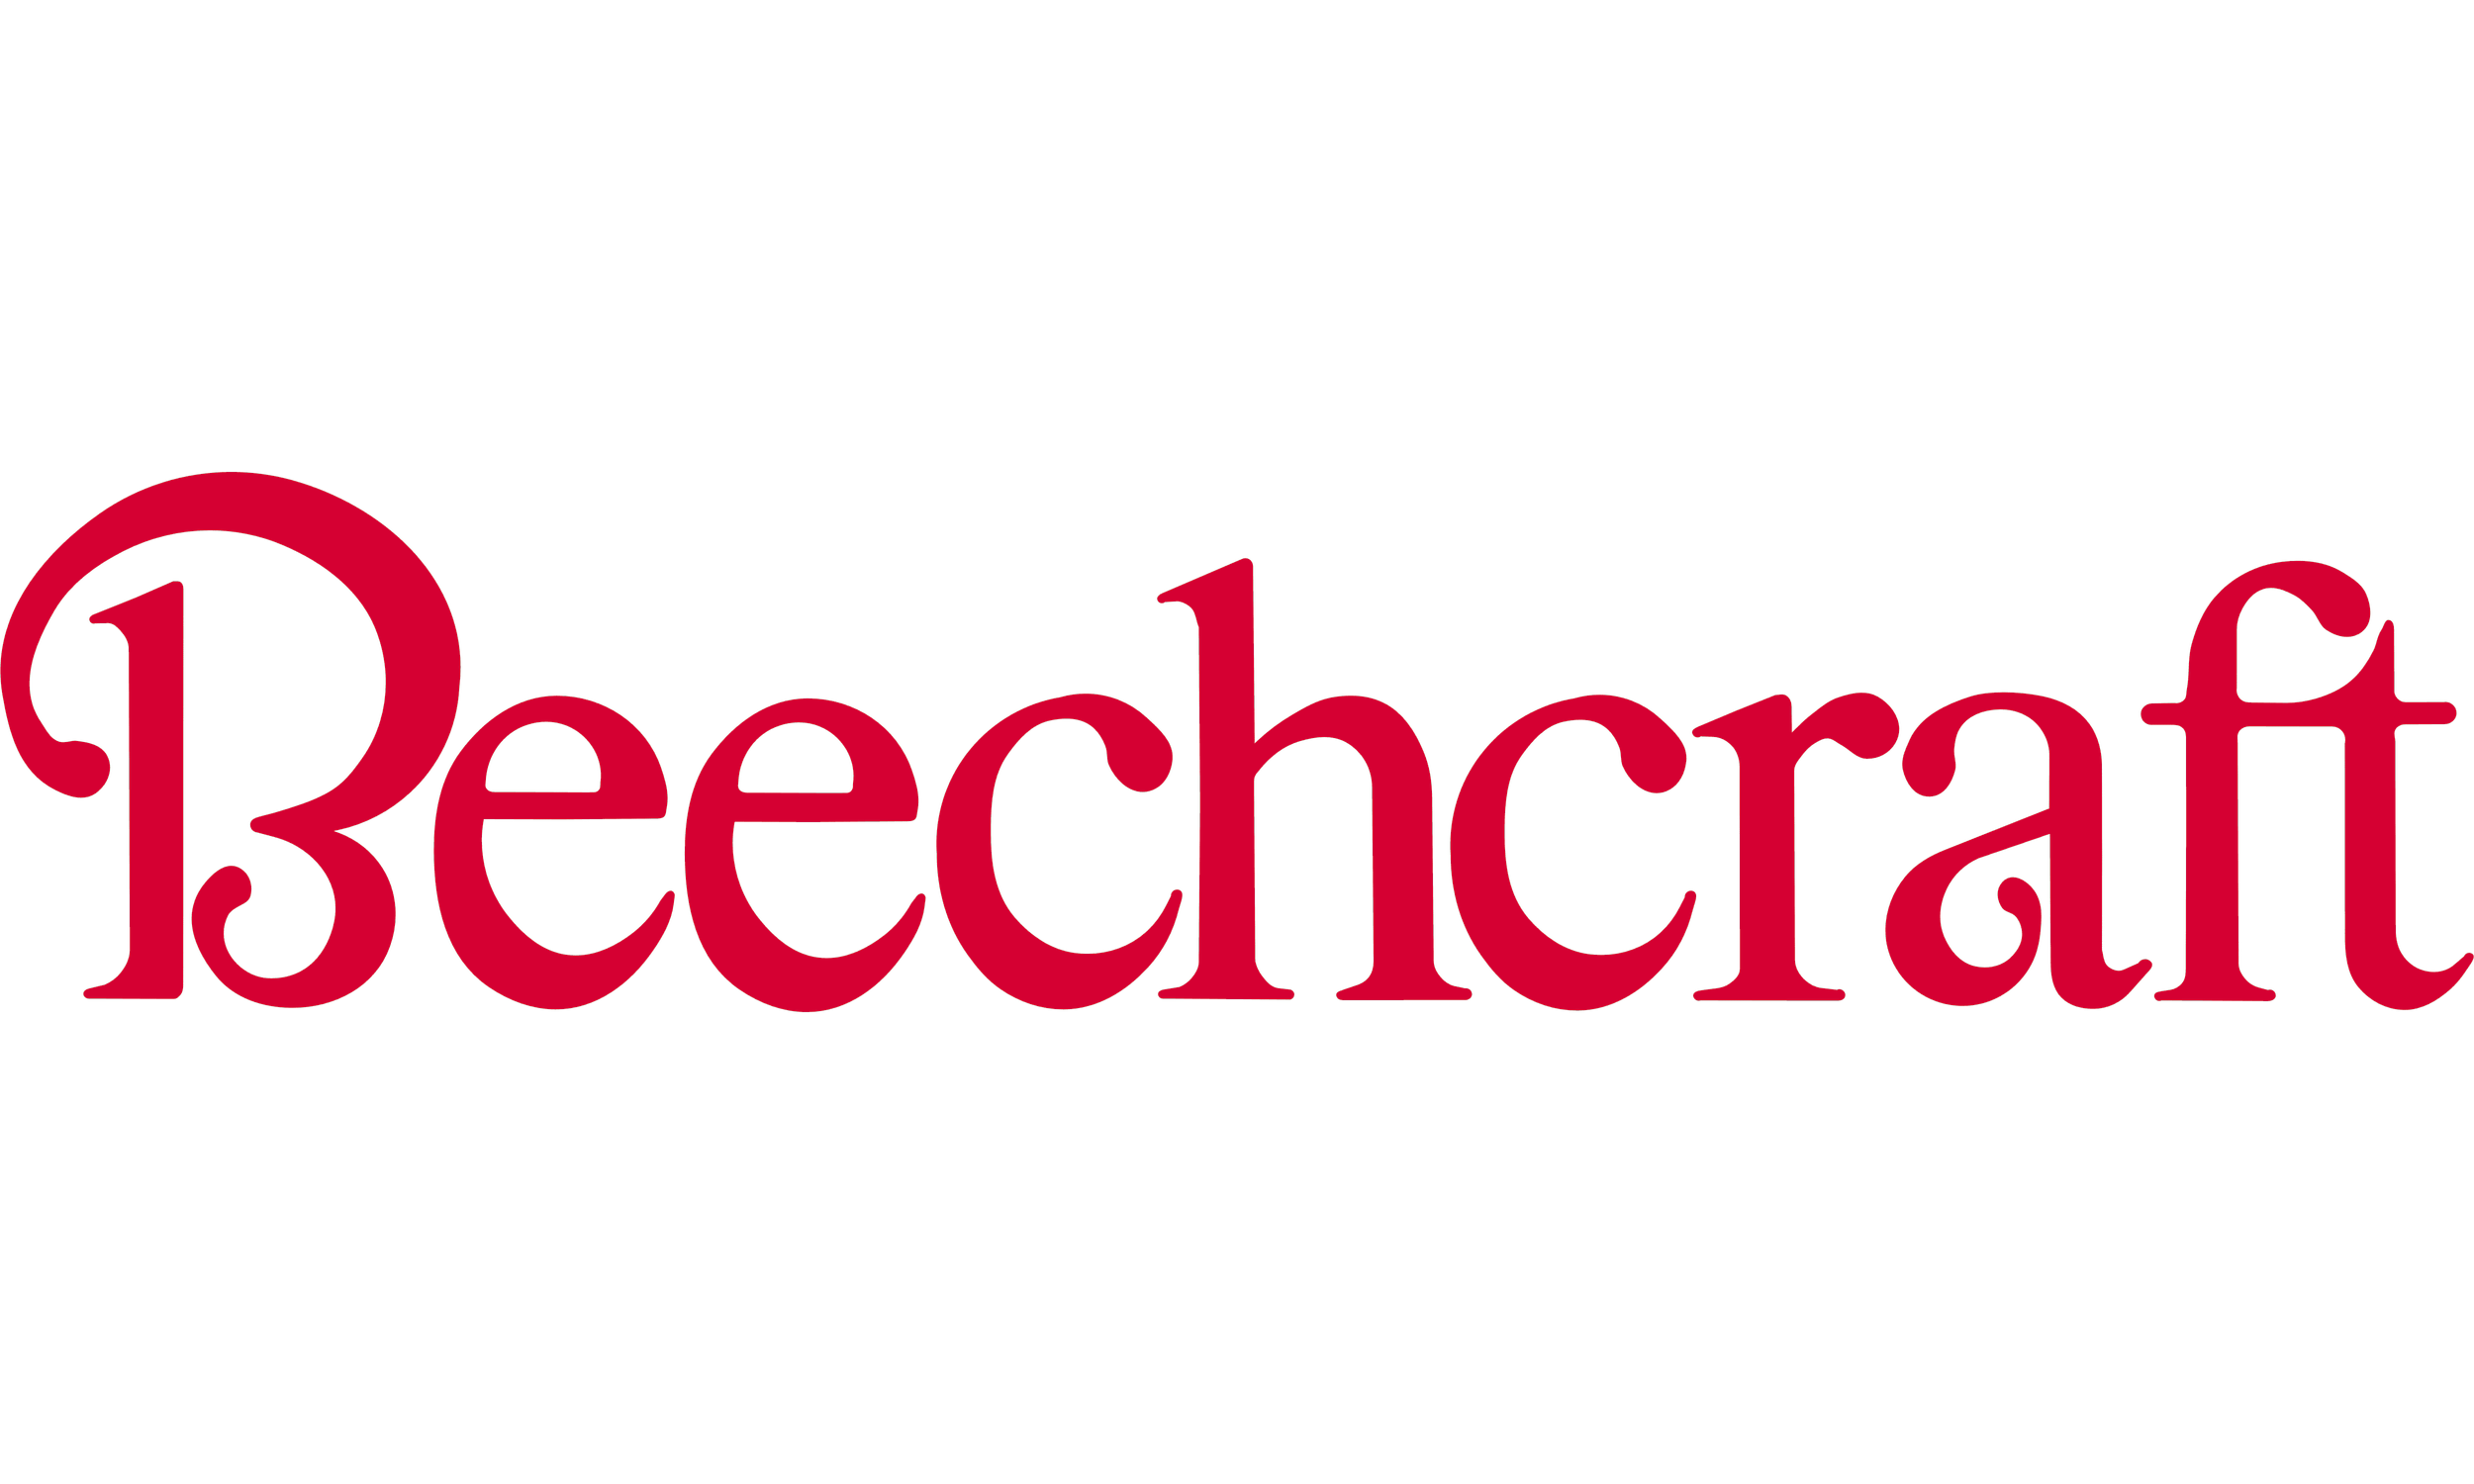 Beechcraft-logo.png